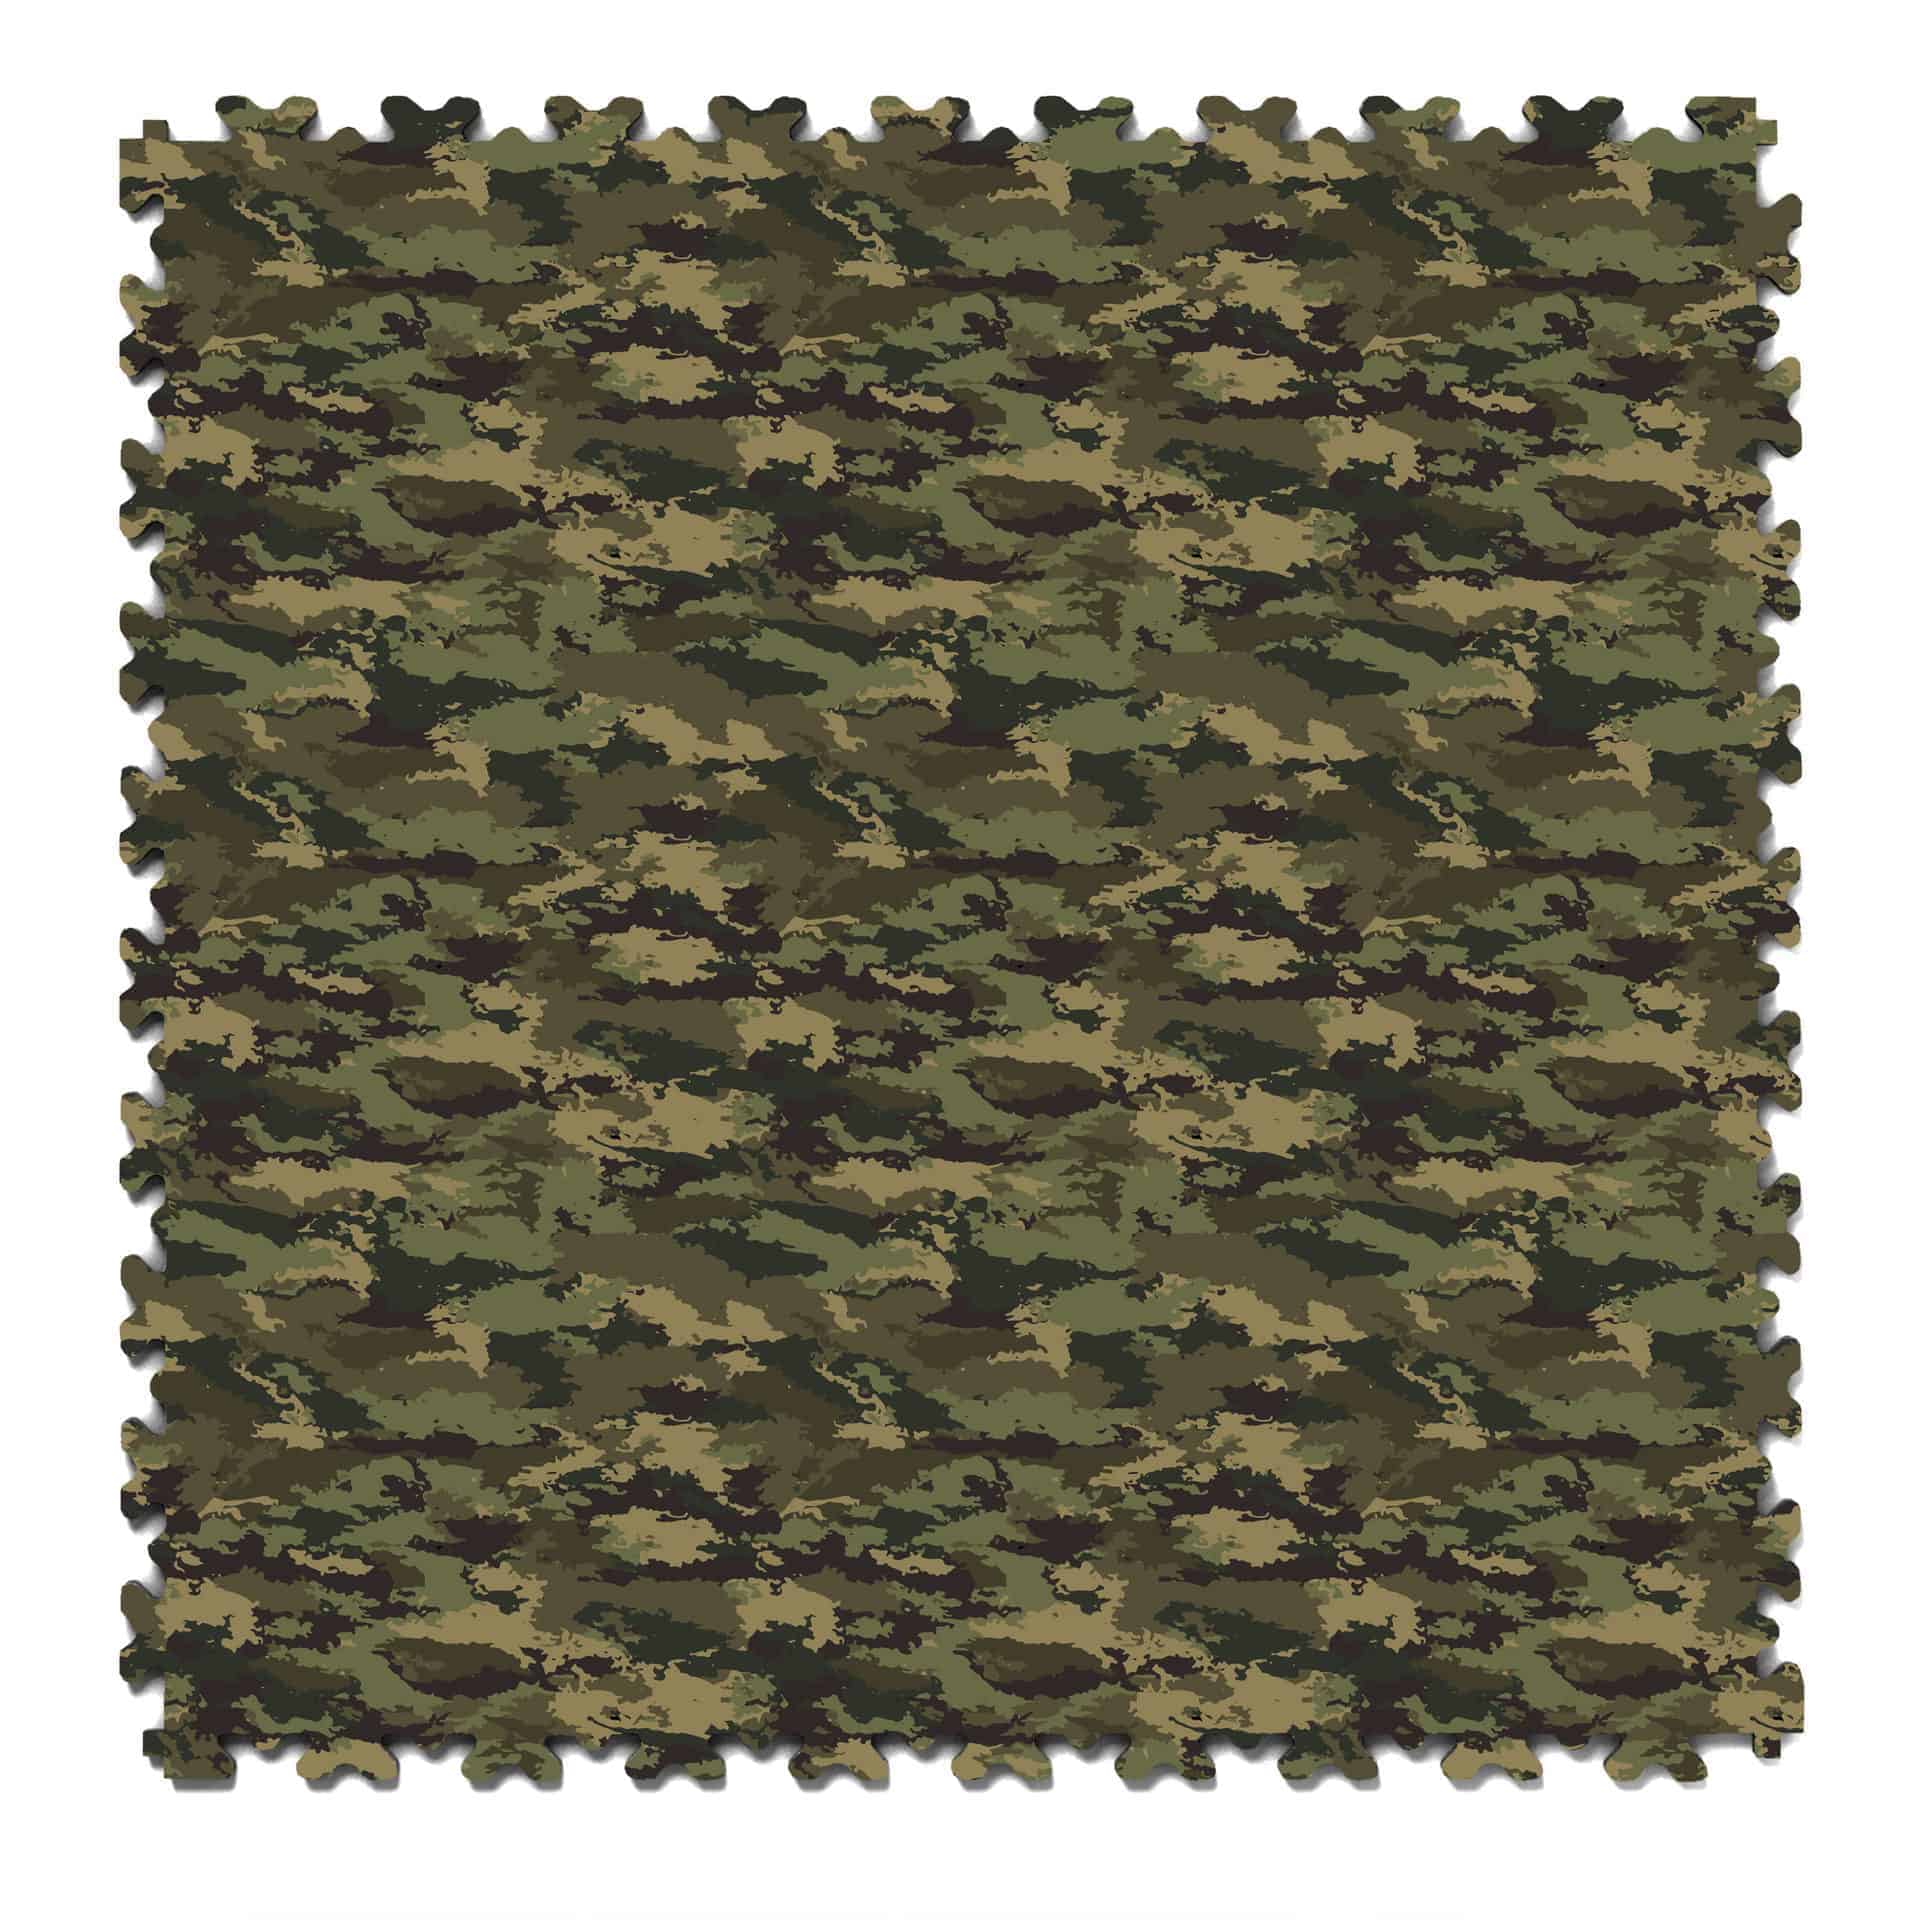 Camouflage prints